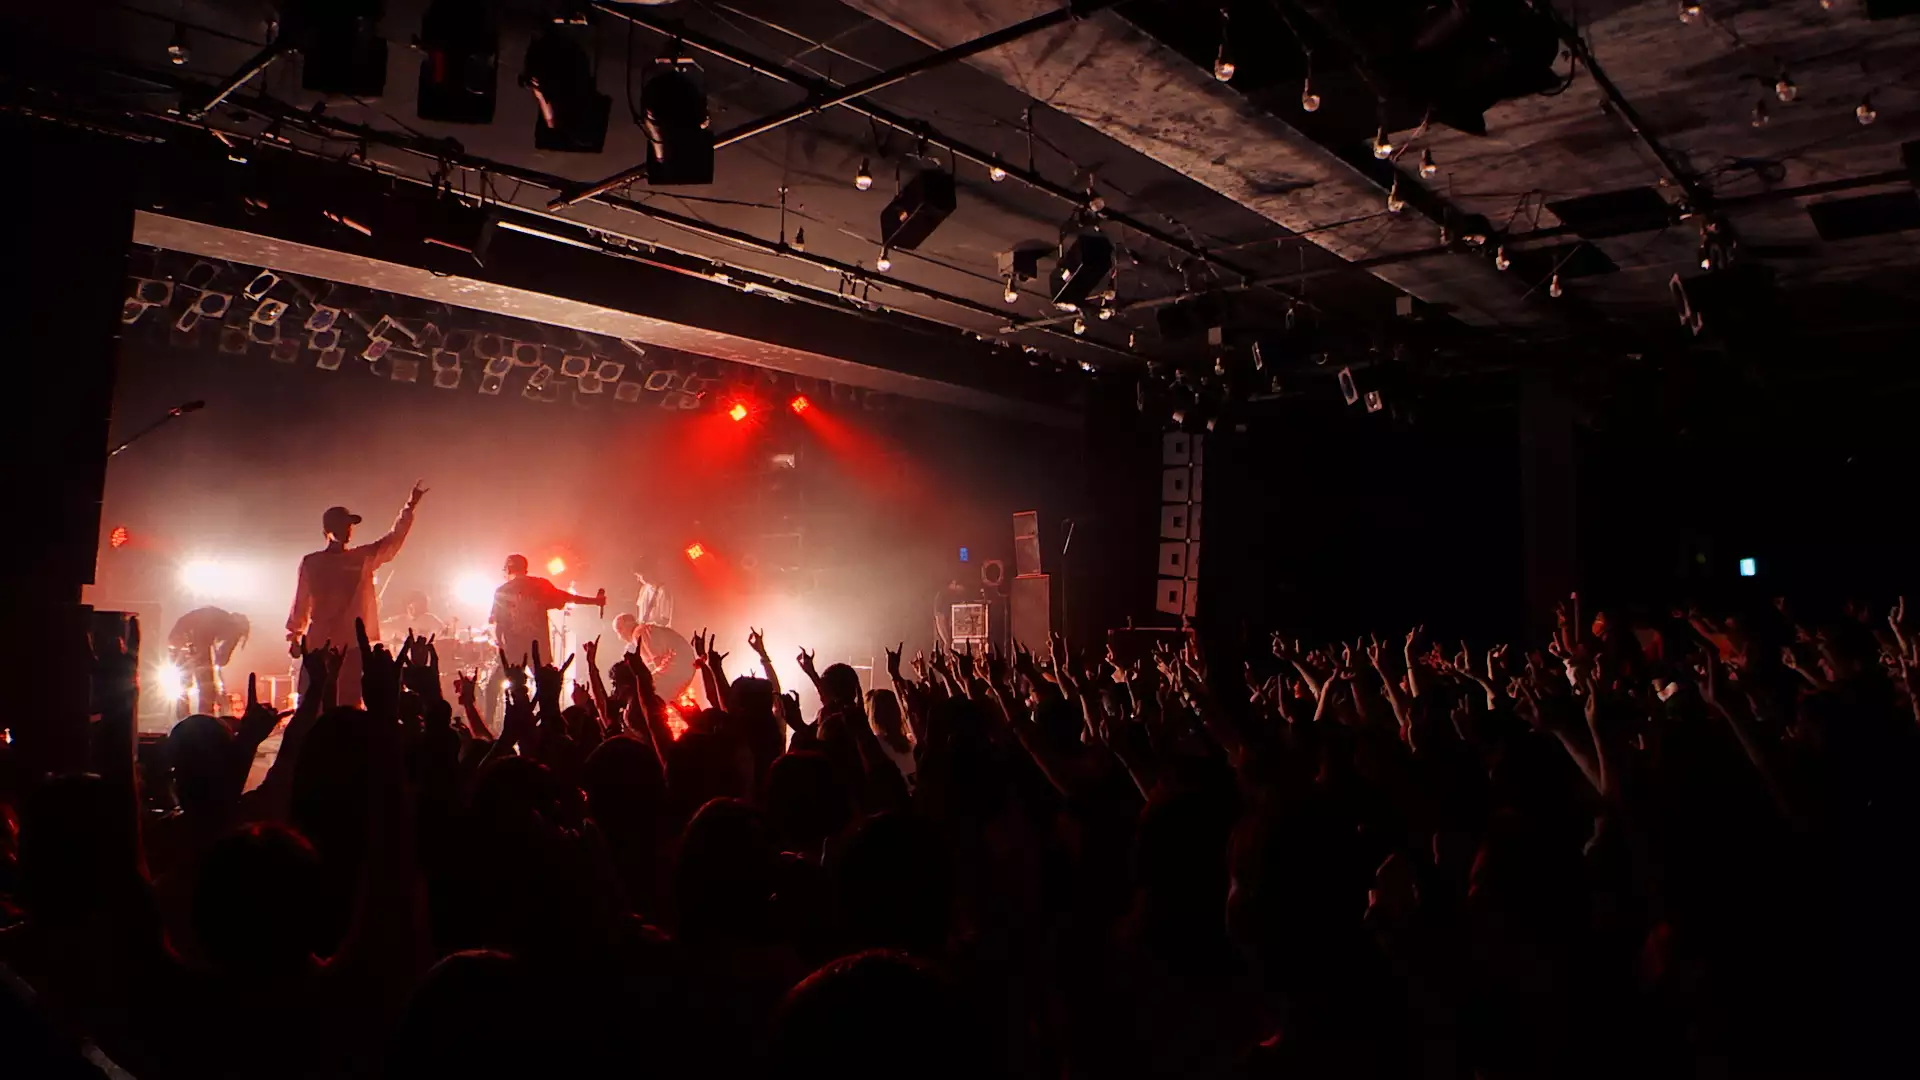 RANGE AID+ presents ORANGE RANGE FC TOUR 021 ～Clap Your Hands～ at 恵比寿LIQUIDROOM